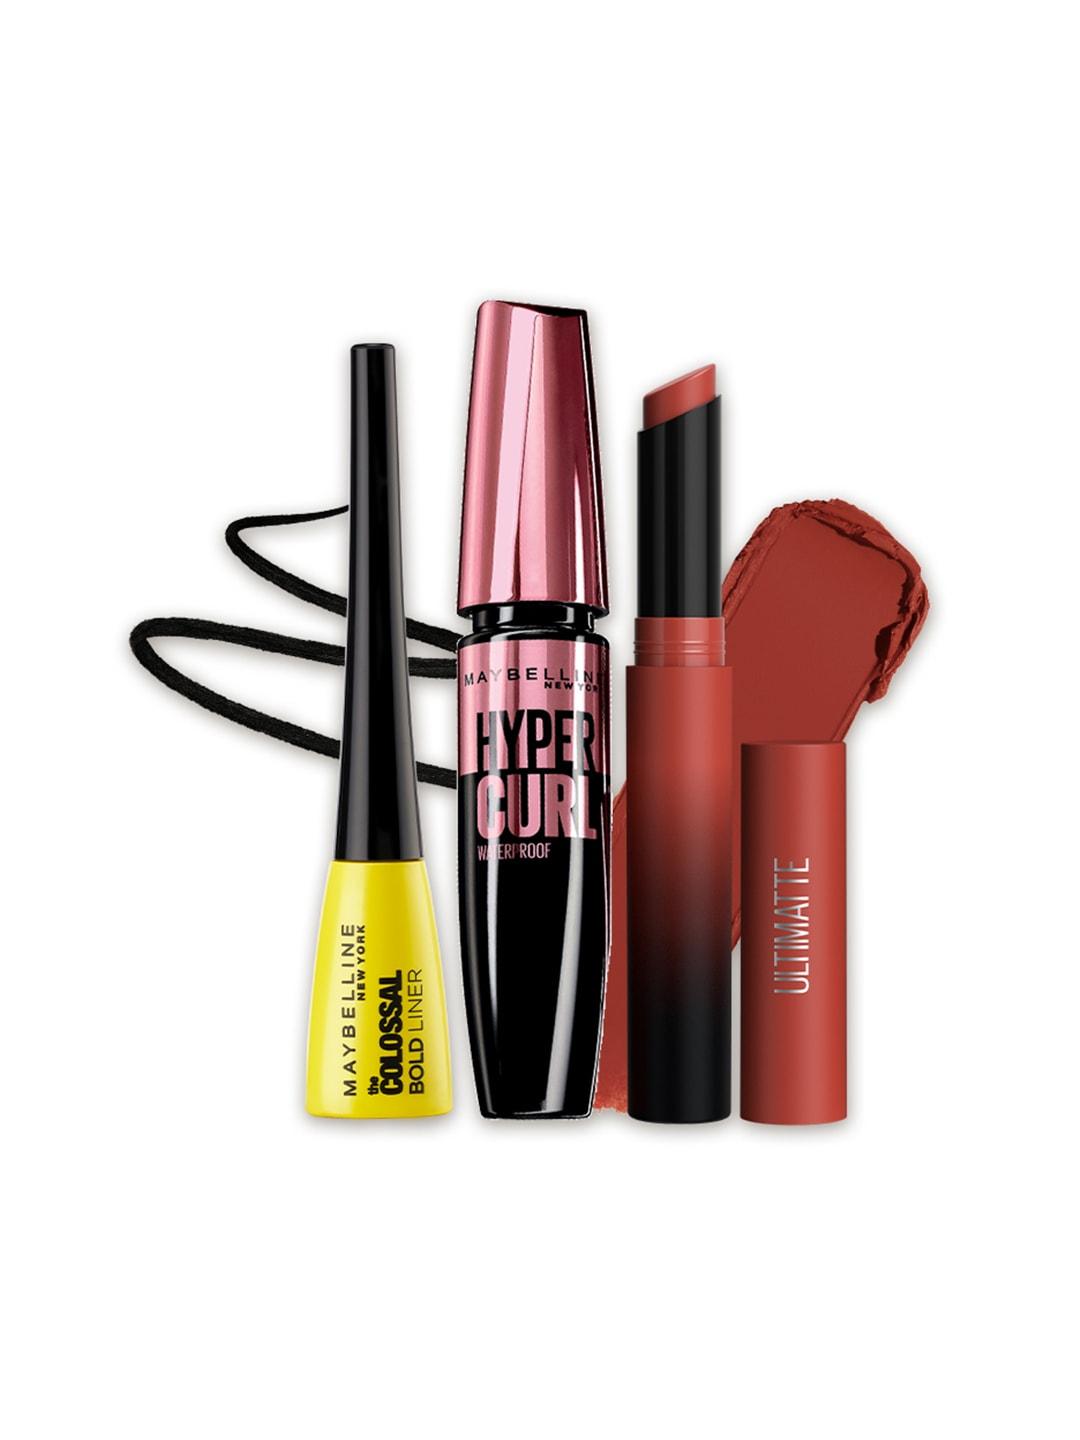 maybelline eye & lip set- the colossal bold liner+ hyper curl mascara+ ultimatte lipstick